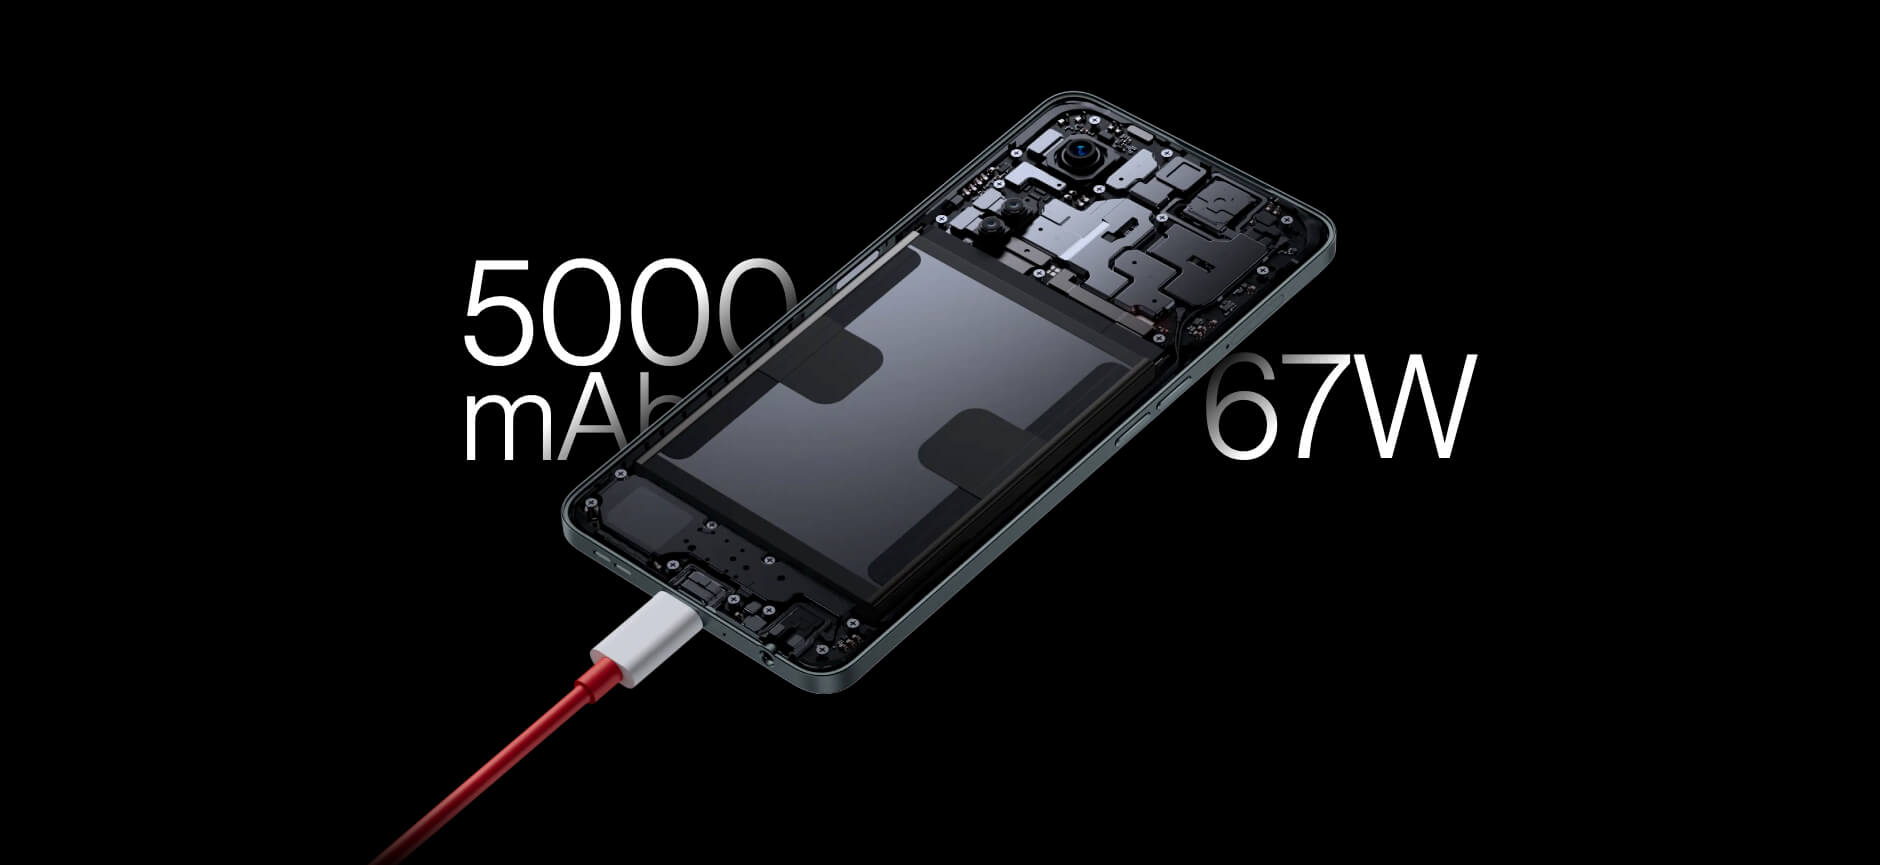 OnePlus Nord CE 3 Lite 5G (Chromatic Gray, 8GB RAM, 128GB Storage) :  : Electronics